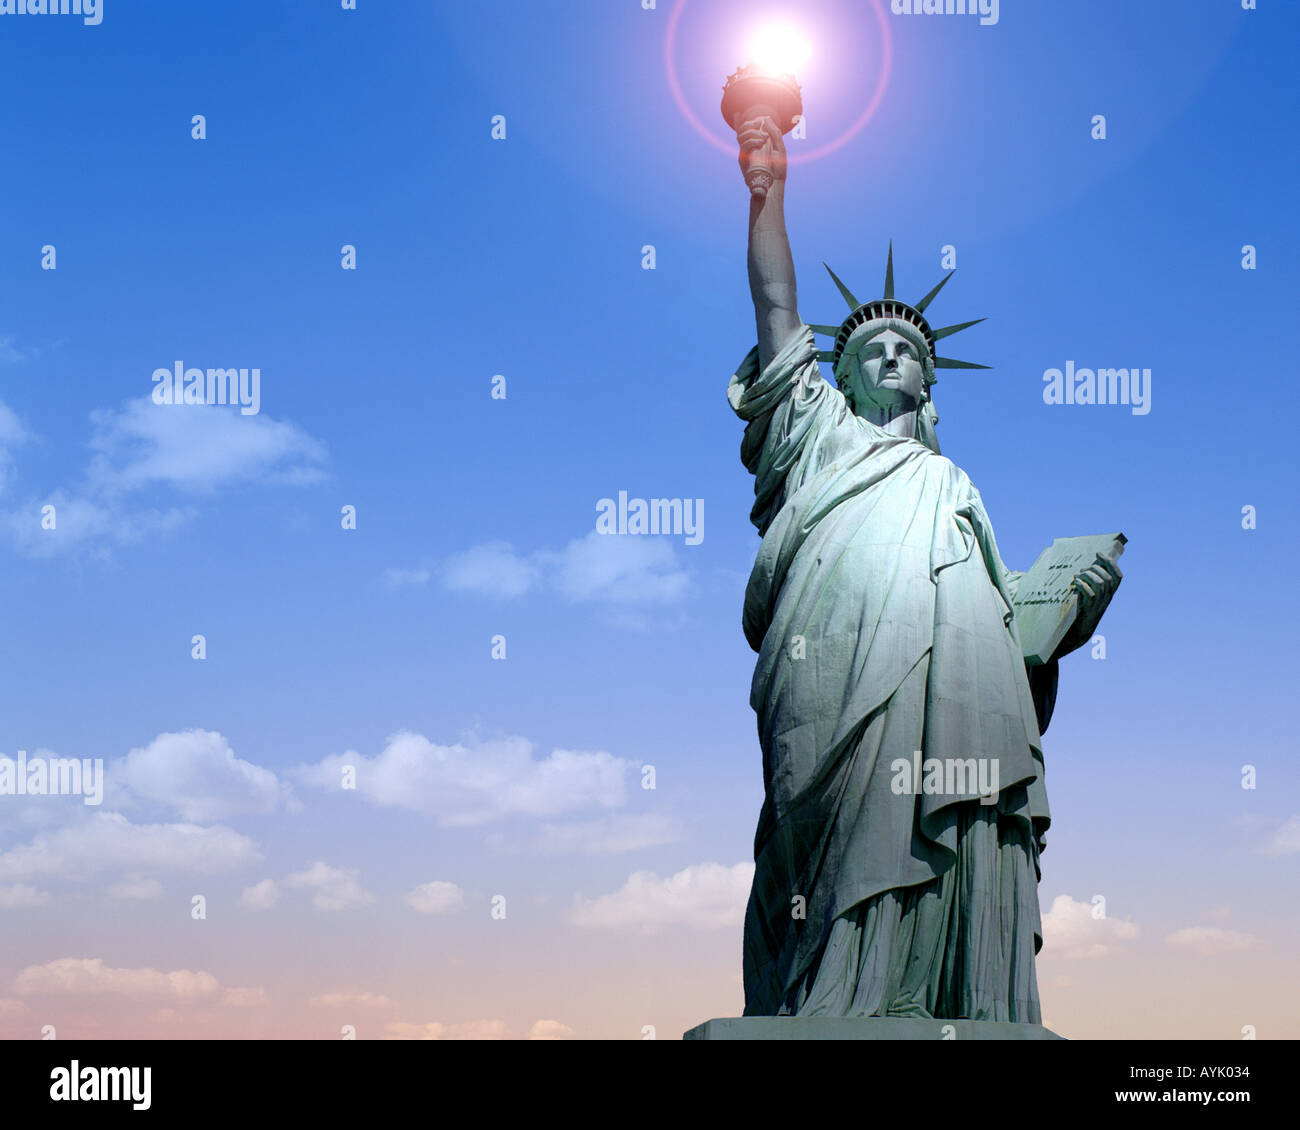 USA - NEW YORK: Statue of Liberty on Liberty Island Stock Photo